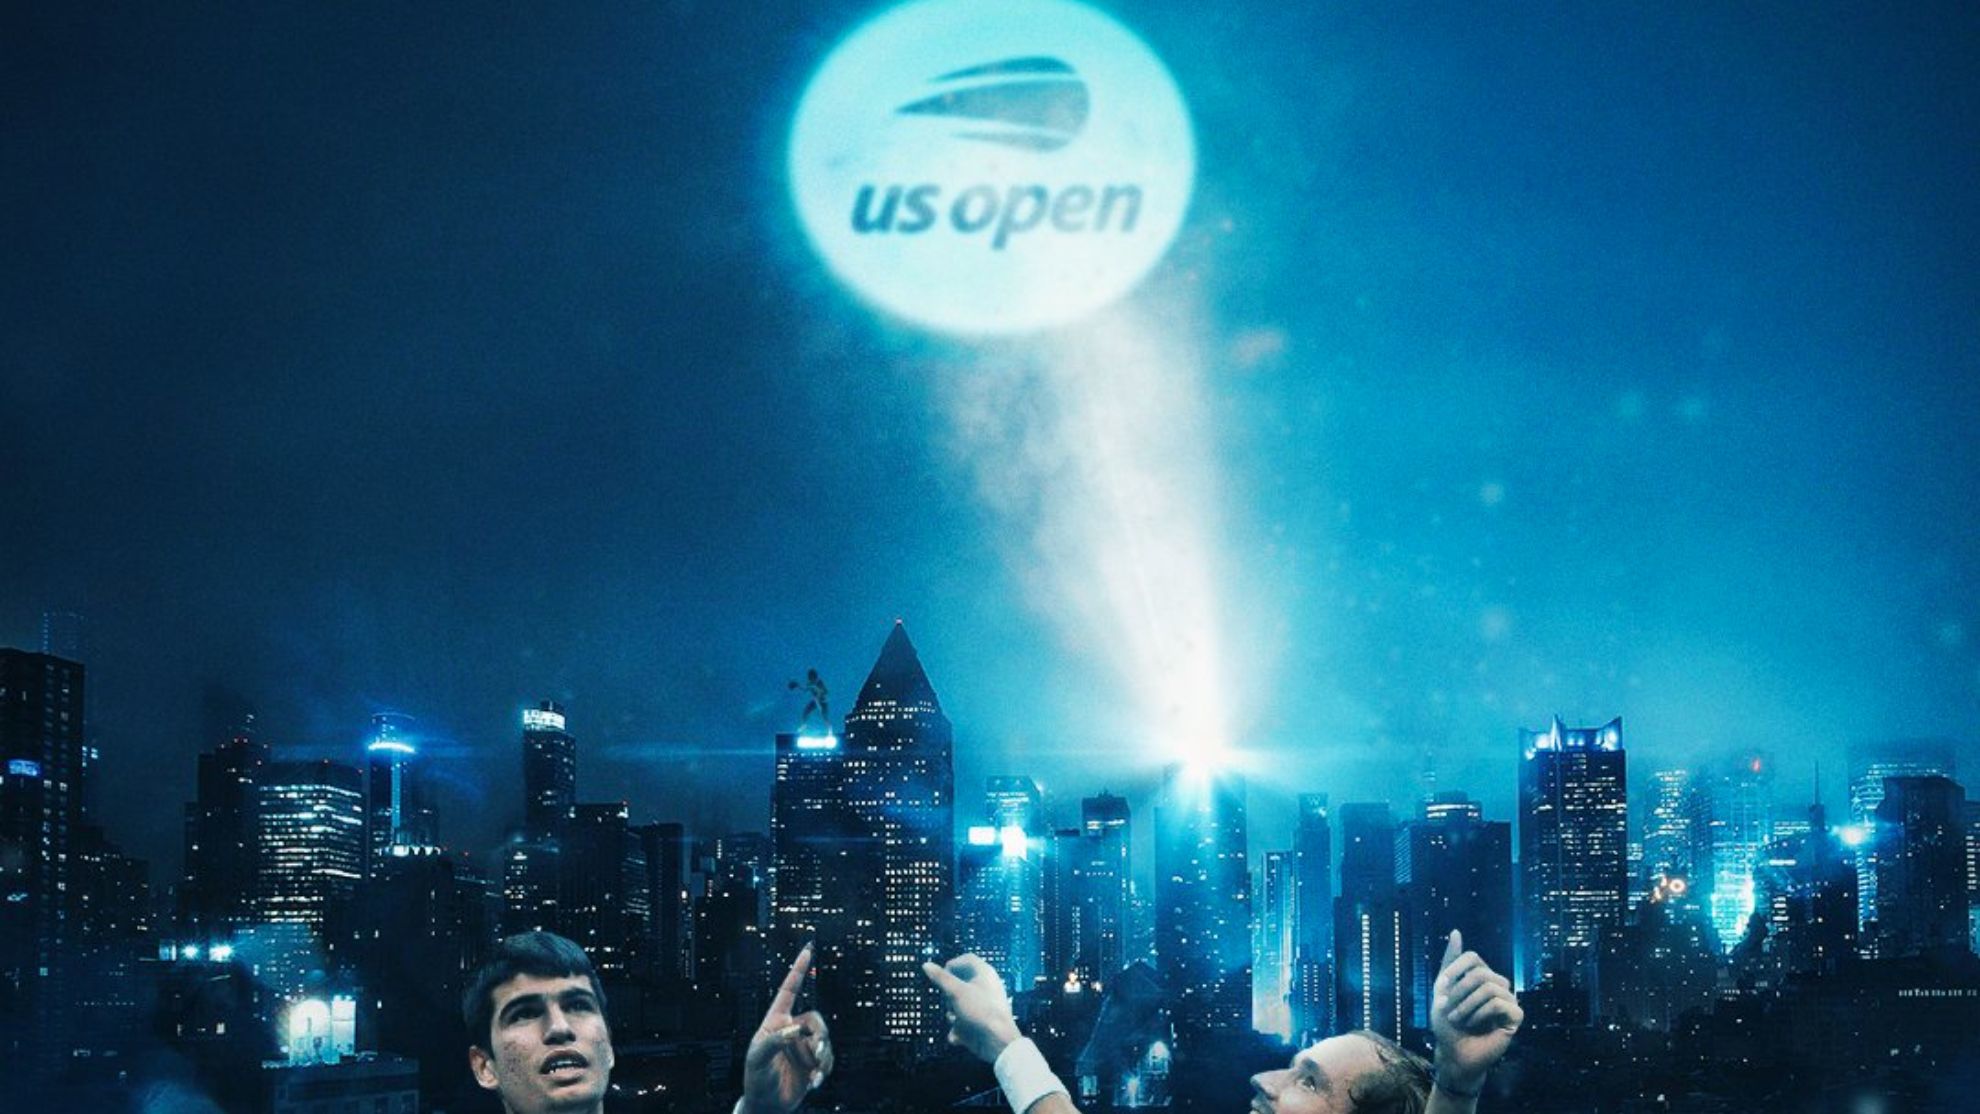 US Open promotional billboard for 2022.